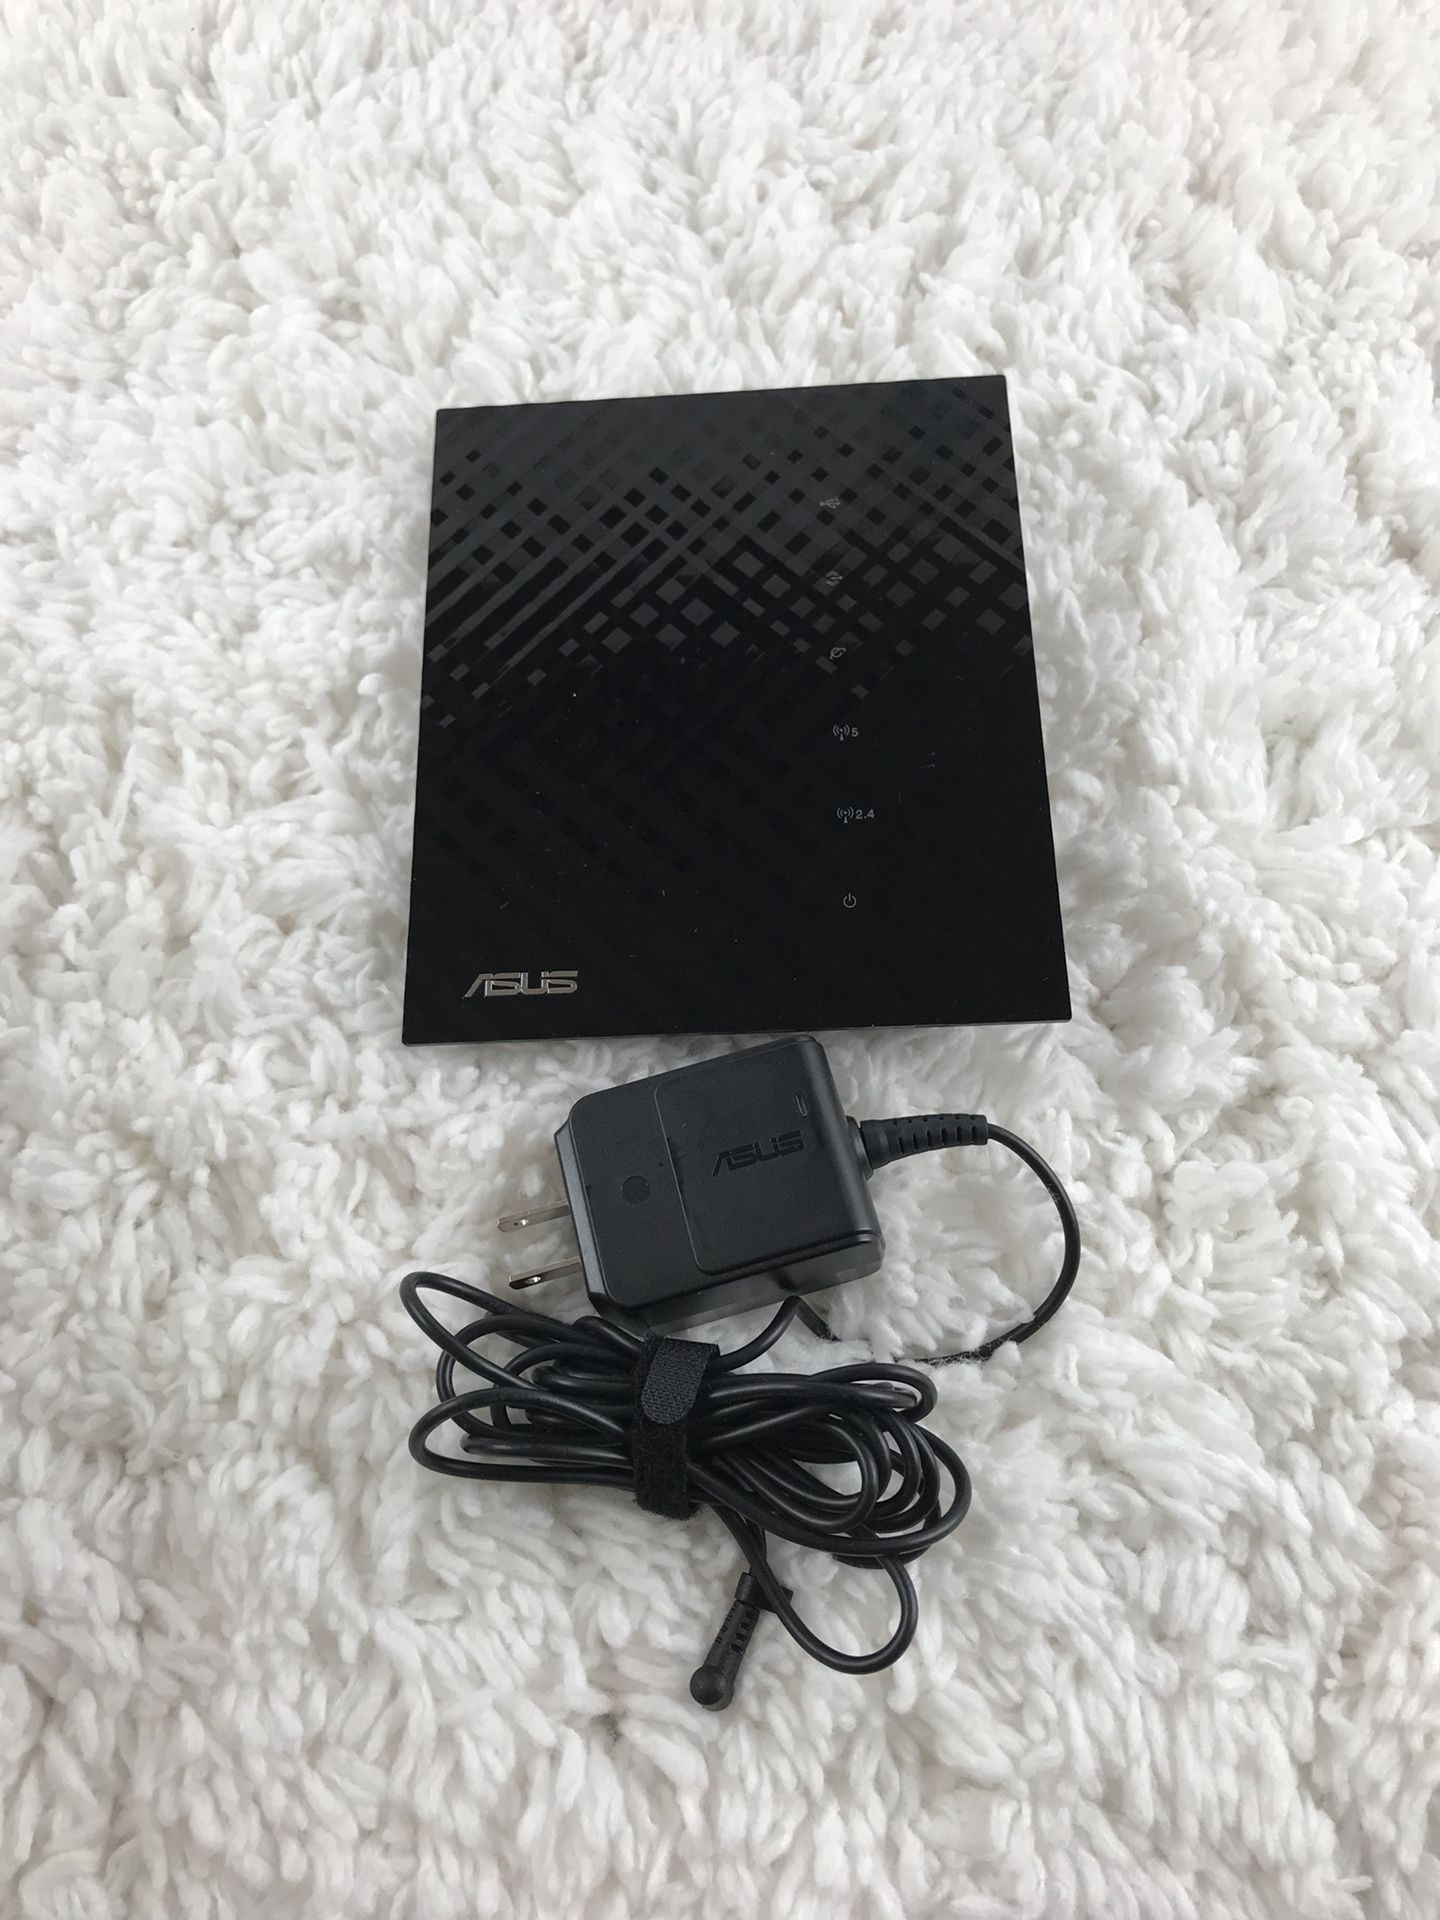 ASUS Wireless Gigabit Router